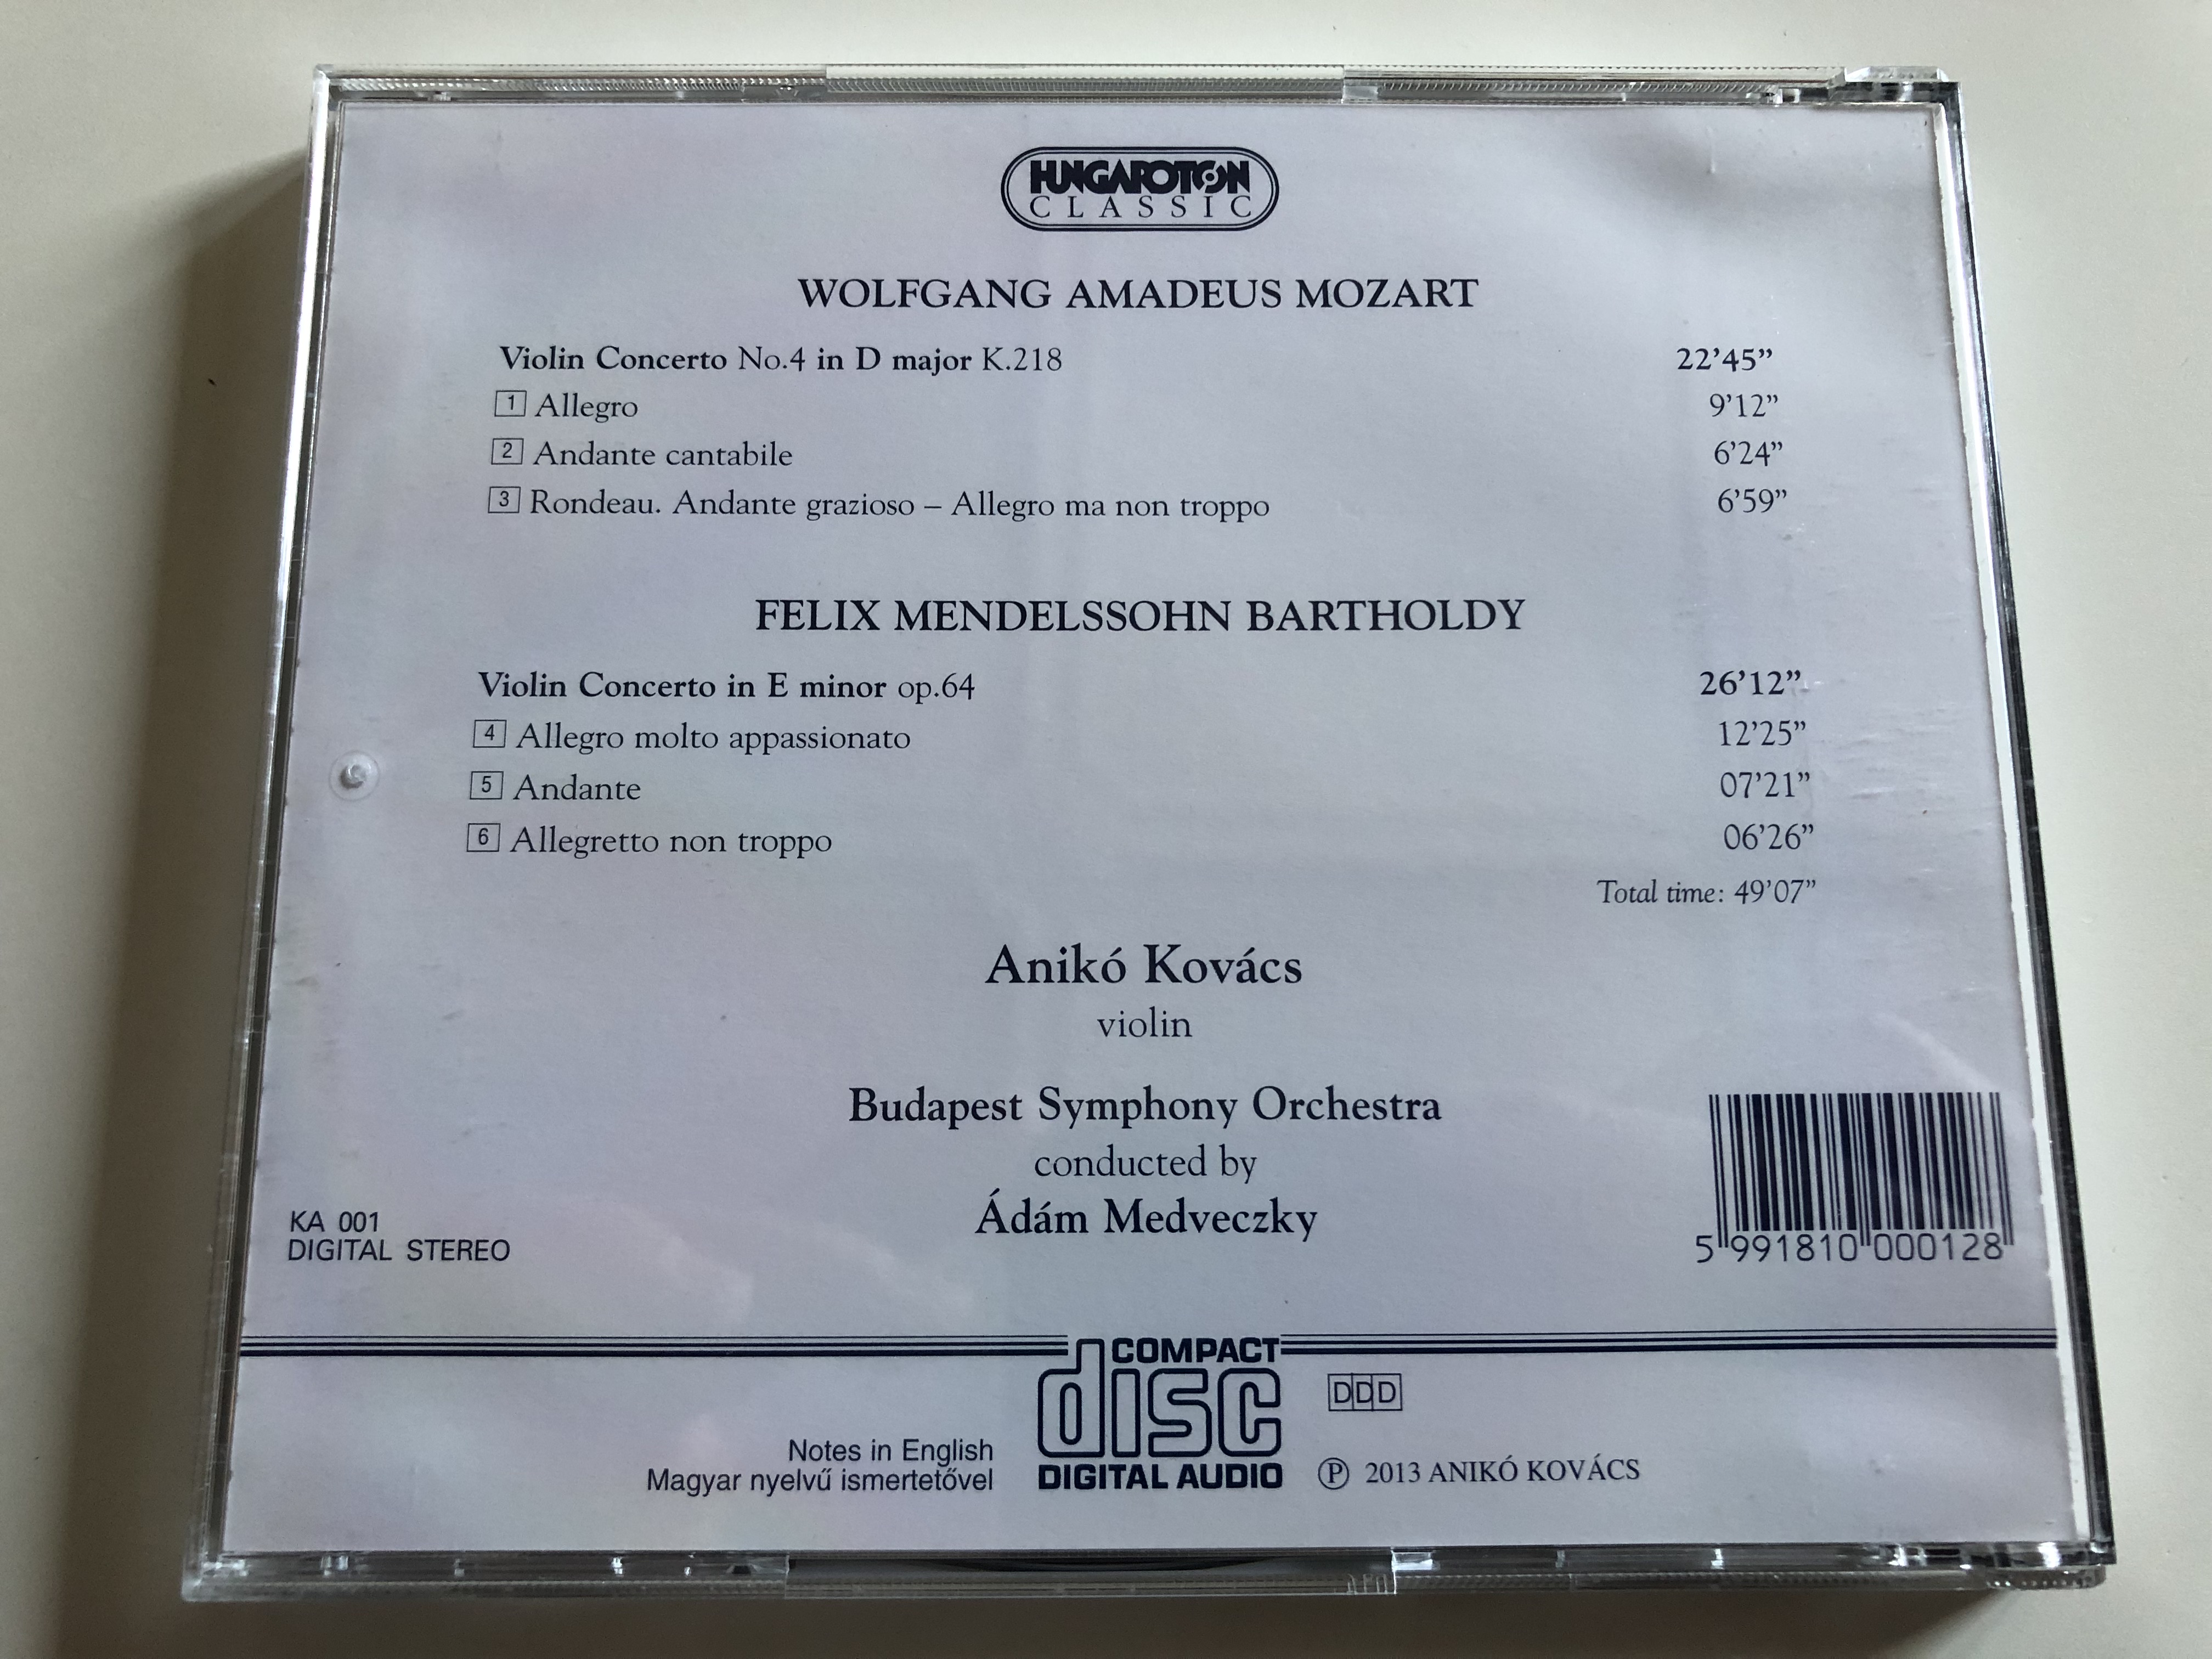 mozart-violin-concerto-no.-4-in-d-major-k.-218-mendelssohn-violin-concerto-in-e-minor-op.-64-aniko-kovacs-budapest-symphony-orchestra-conducted-by-adam-medveczky-hungaroton-classic-audio-cd-6-.jpg